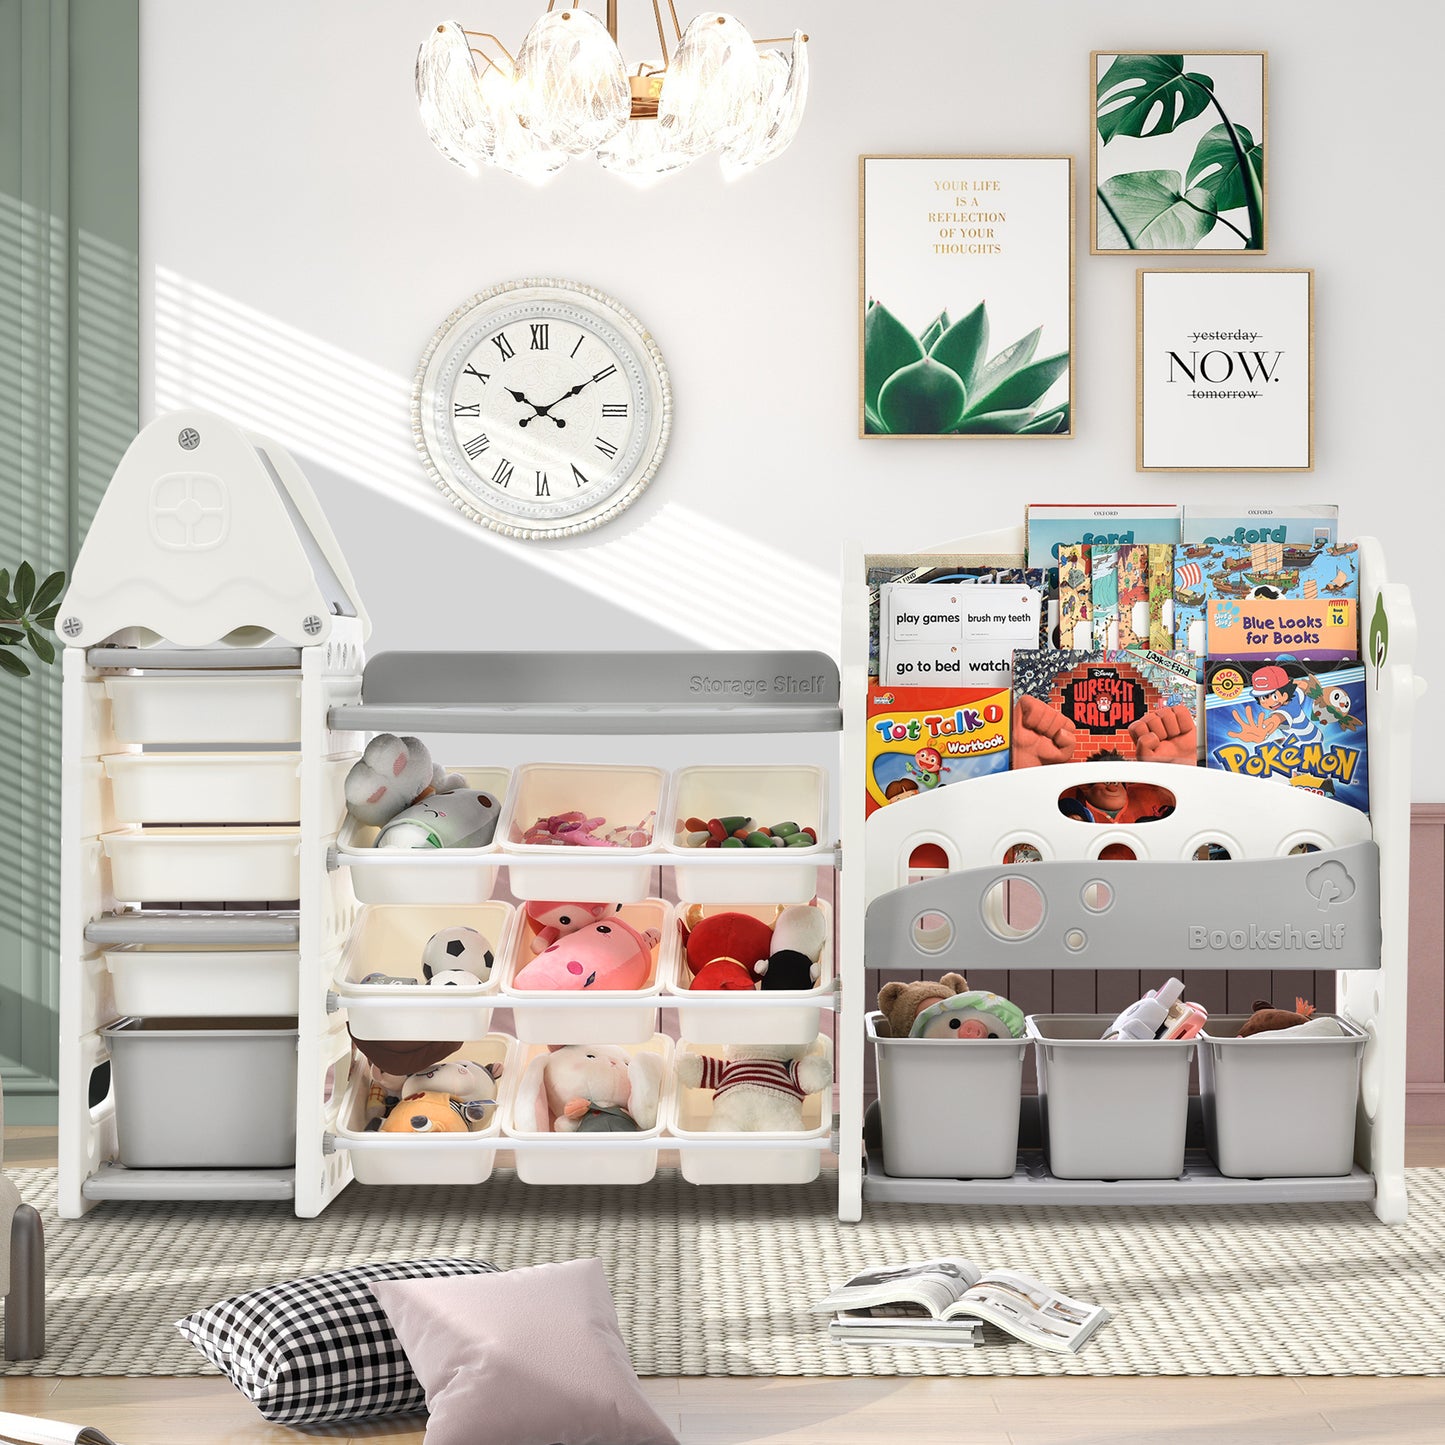 "Kids Bookshelf Toy Storage Organizer with 17 Bins and 4 Bookshelves - Multi-functional Nursery Organizer for Kids Furniture Set - Toy Storage Cabinet Unit with HDPE Shelf and Bins"